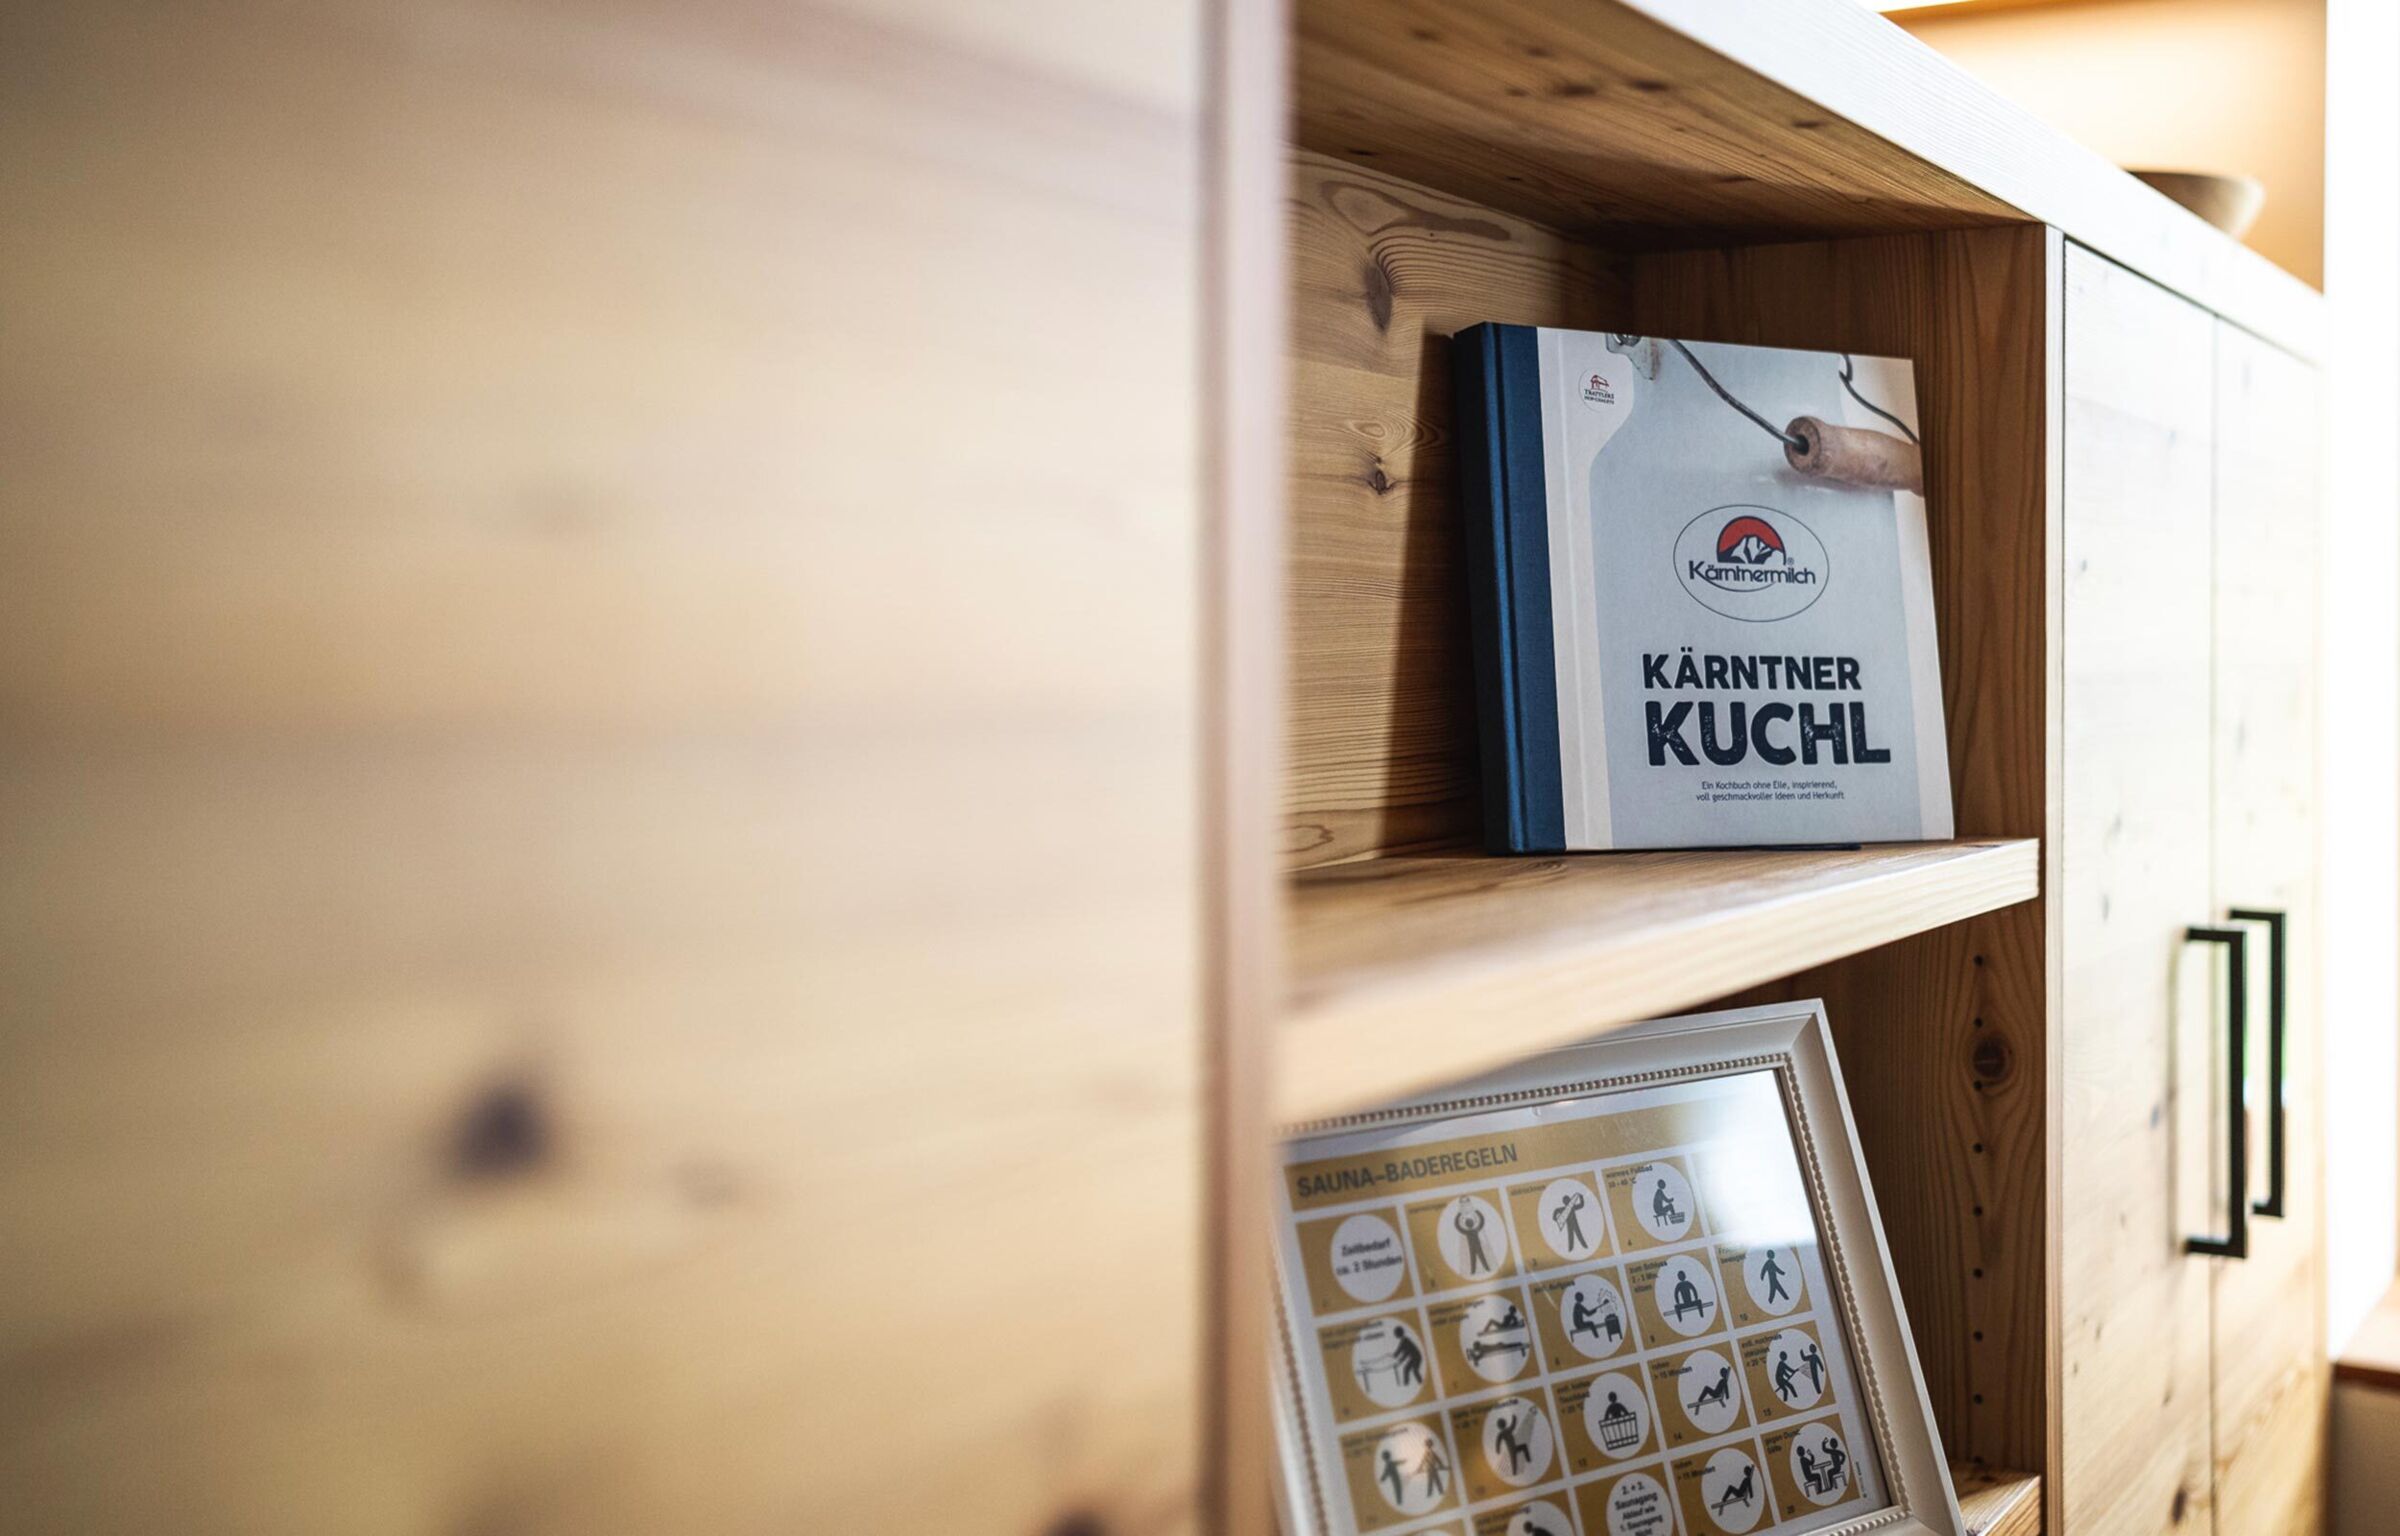 The book "Kärntner Kuchl" is on the shelf.